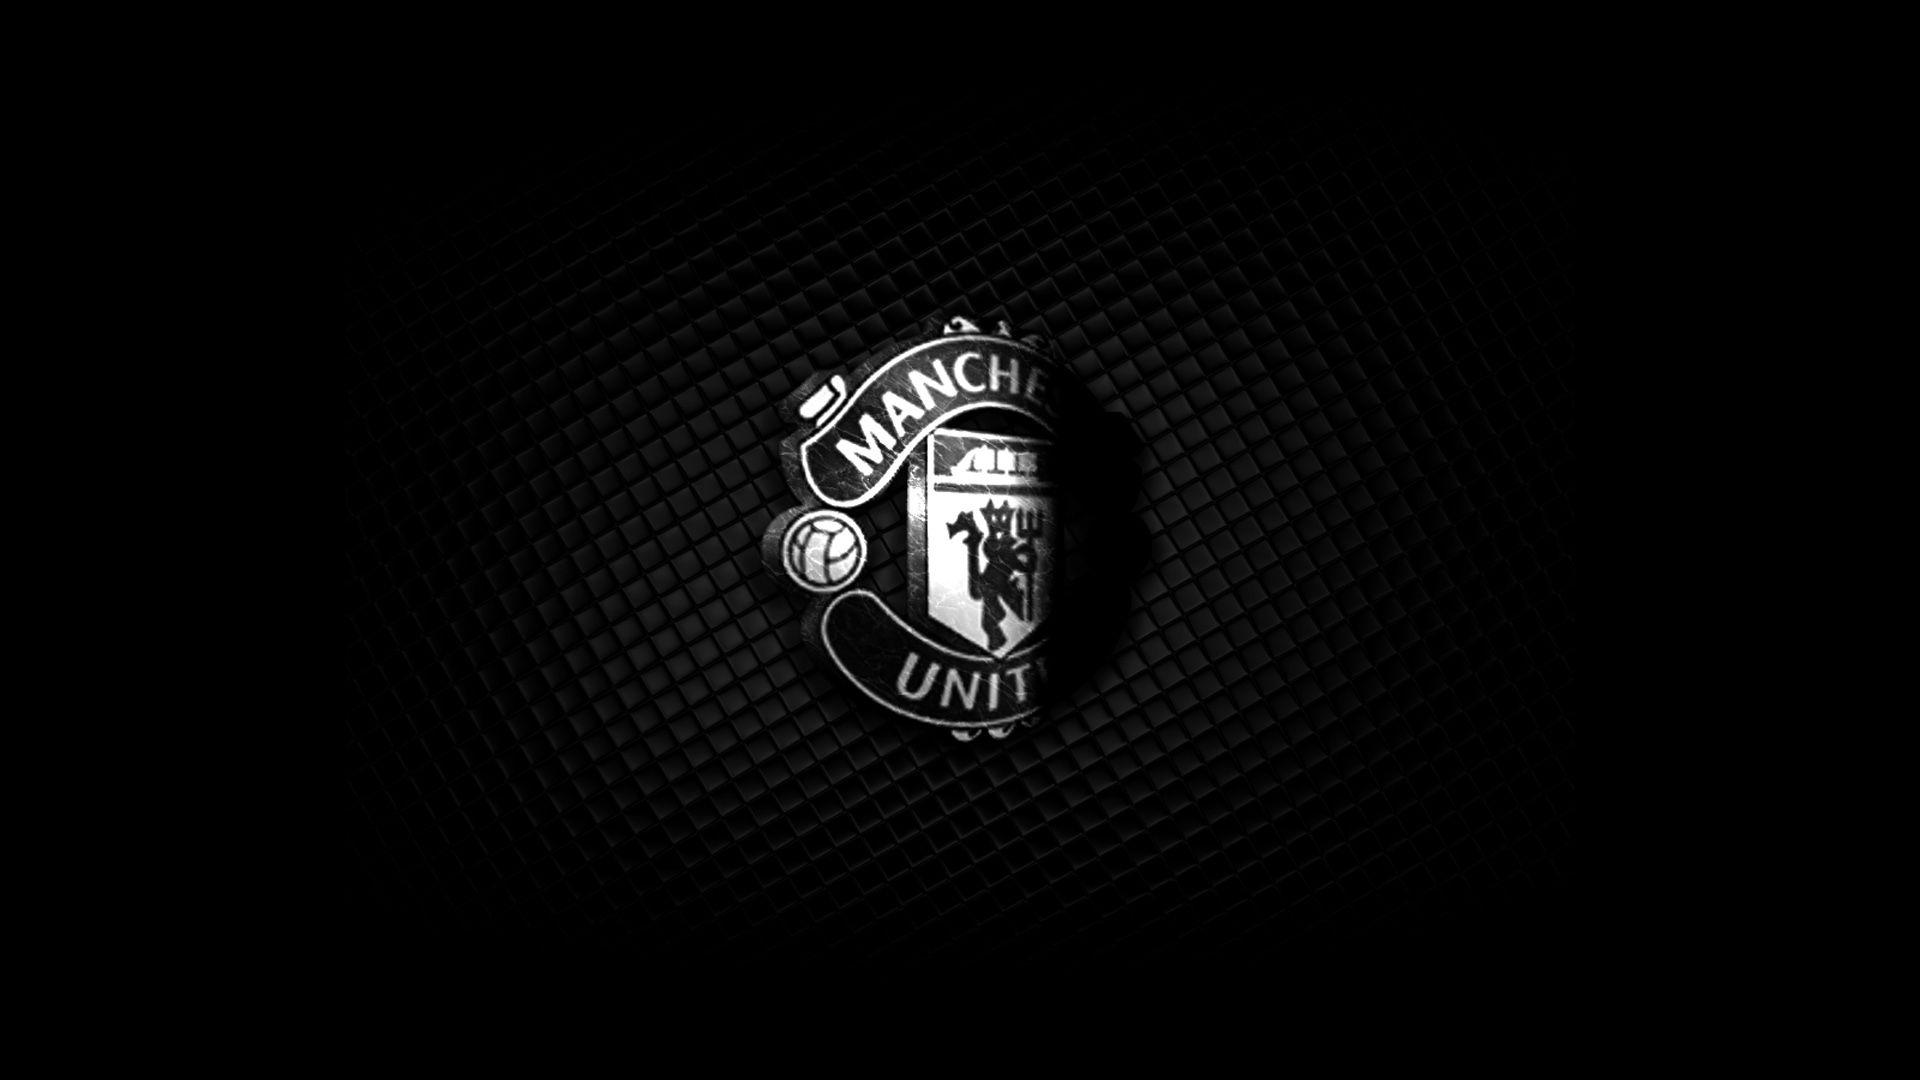 Cool Black Logo - Manchester United Black Logo Cool Soccer Wallpaper 1920x1080